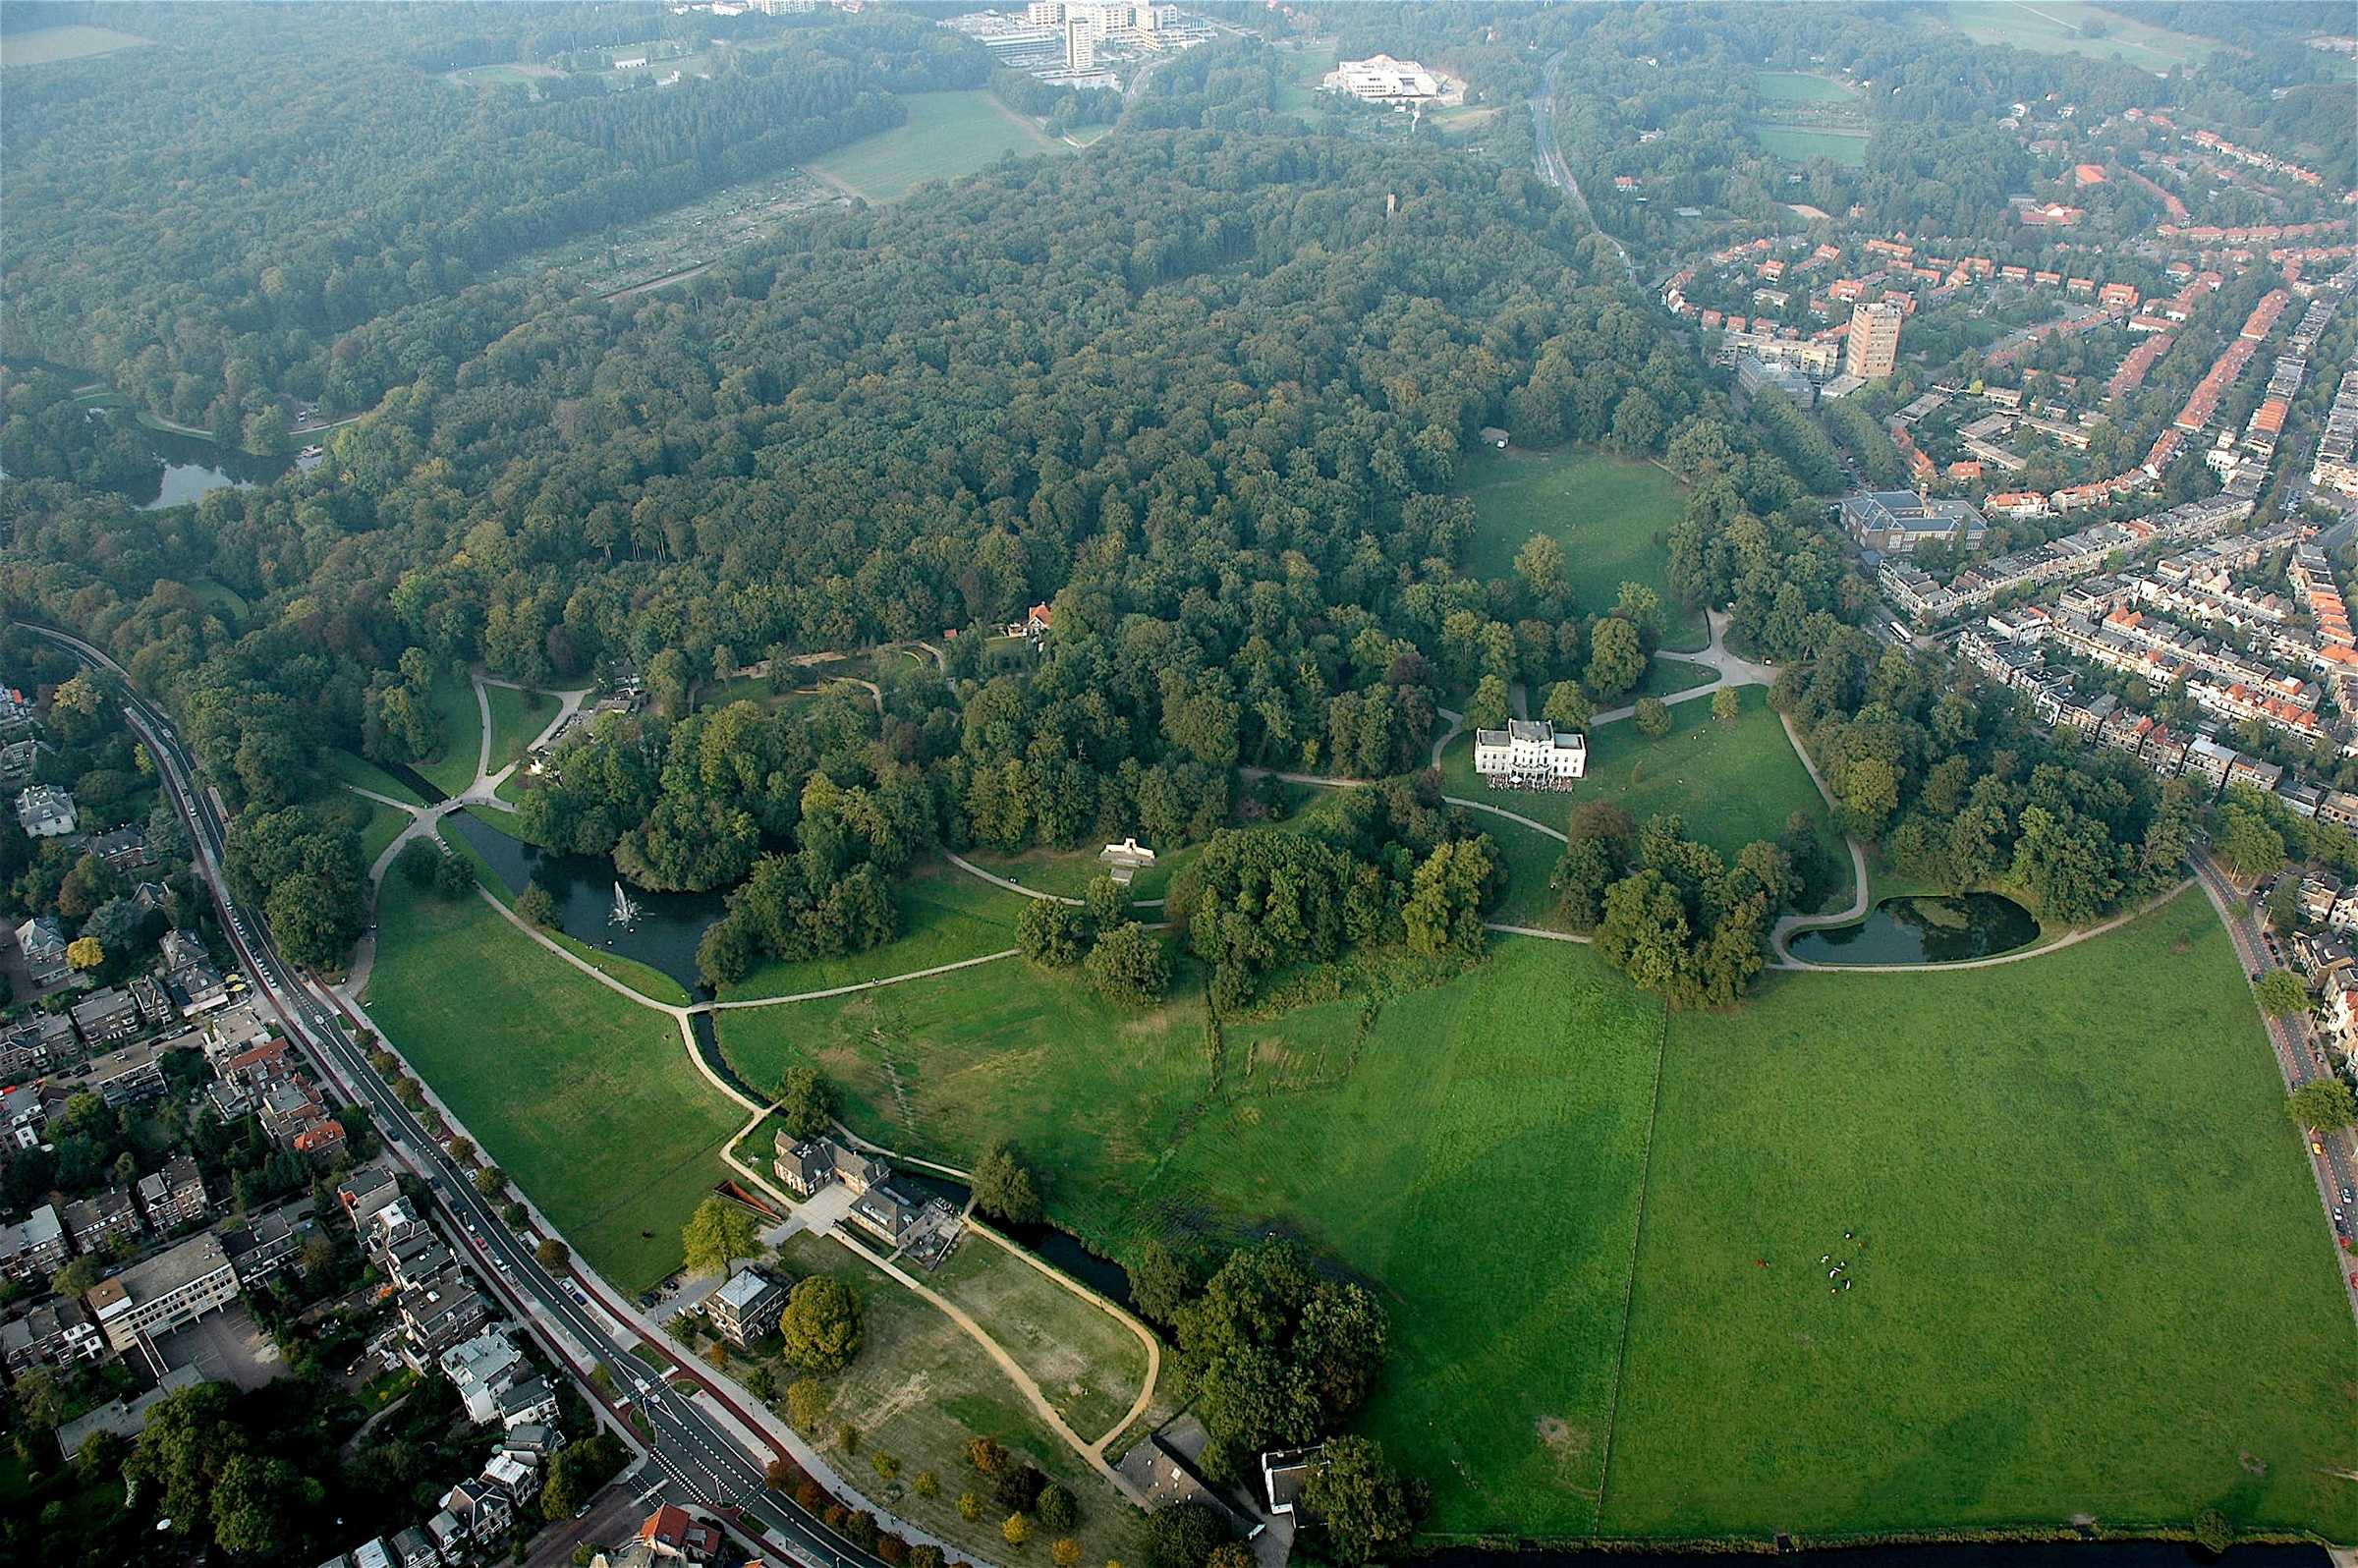 Park Sonsbeek overview